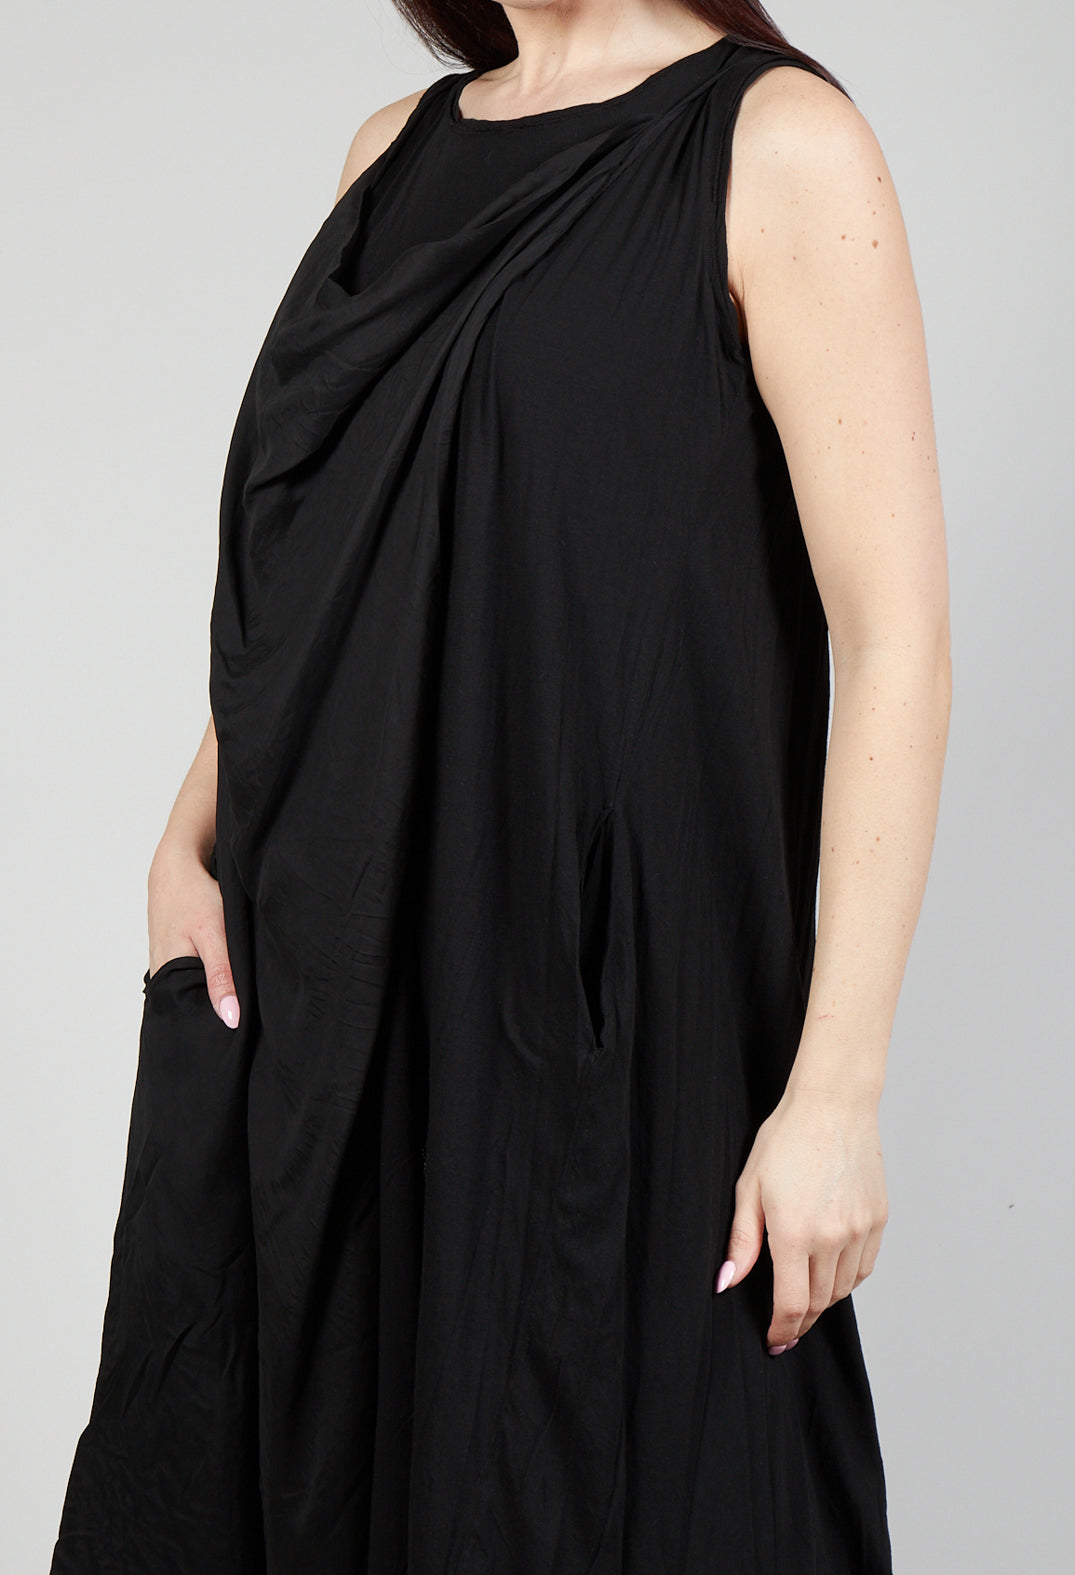 Cowl Neckline Dress in Black